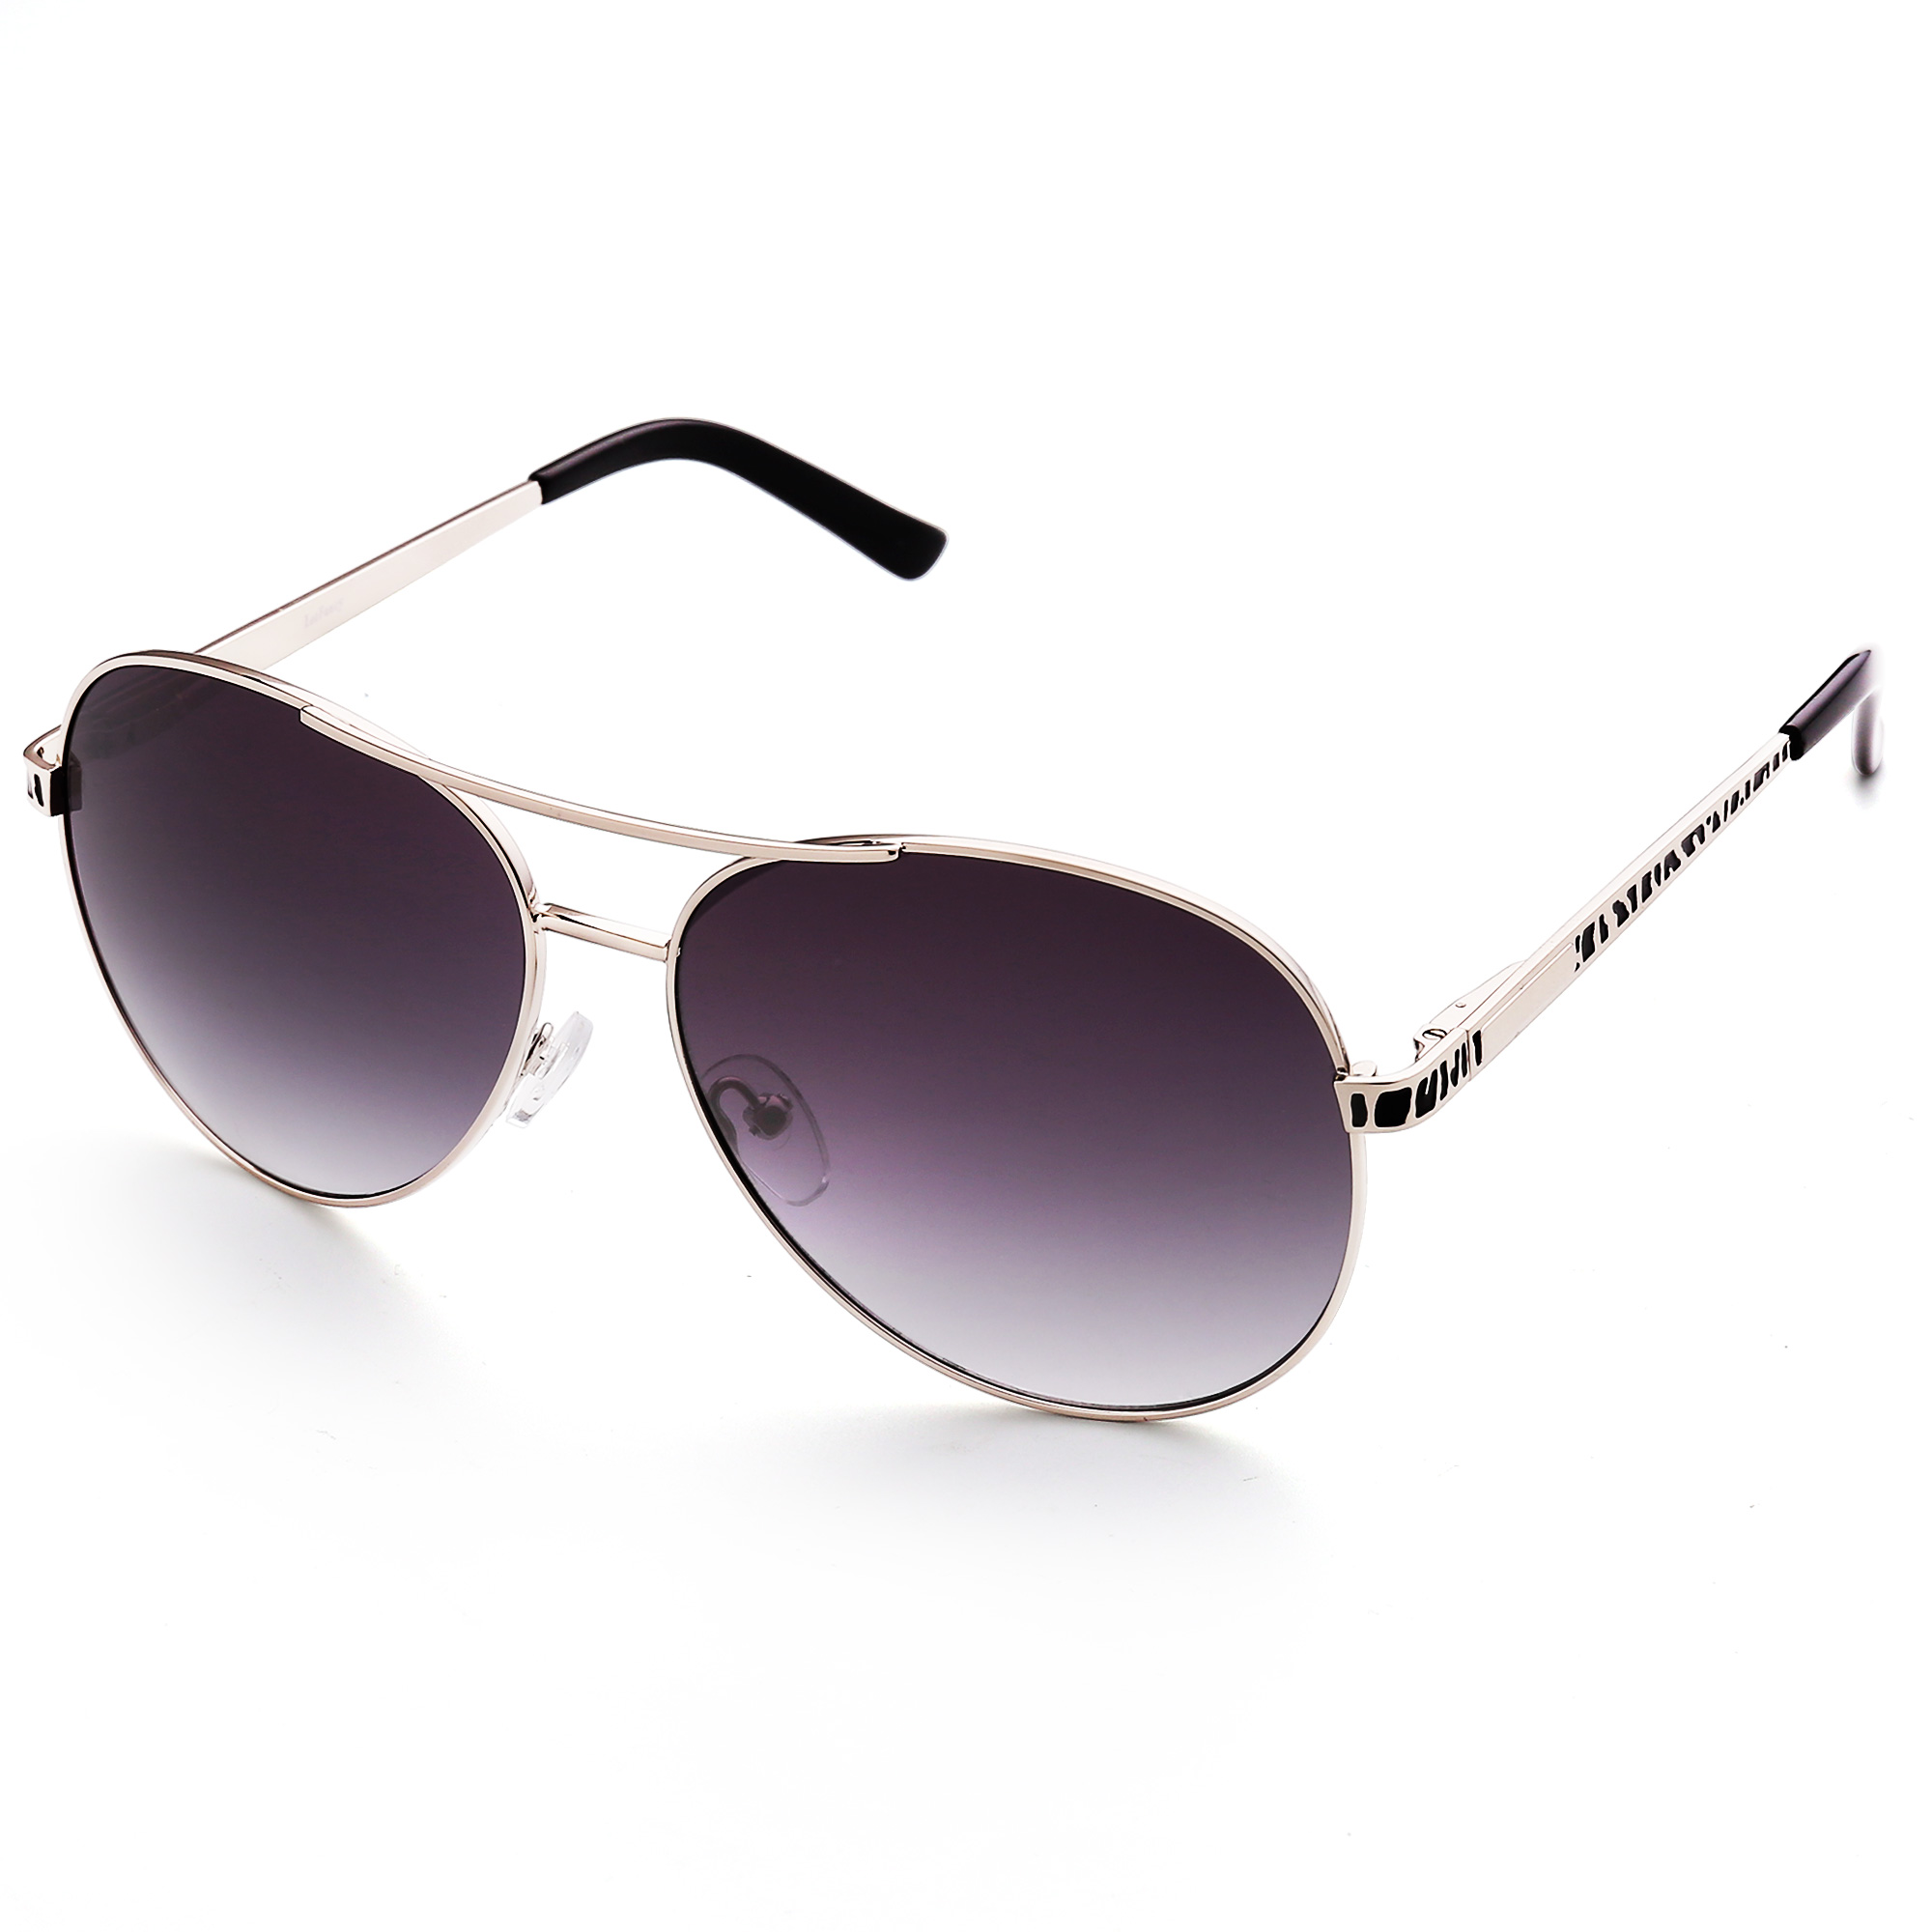 LotFancy Women's Aviator Sunglasses, Ultra Lightweight,UV400 Protection,Light Gray - image 1 of 7